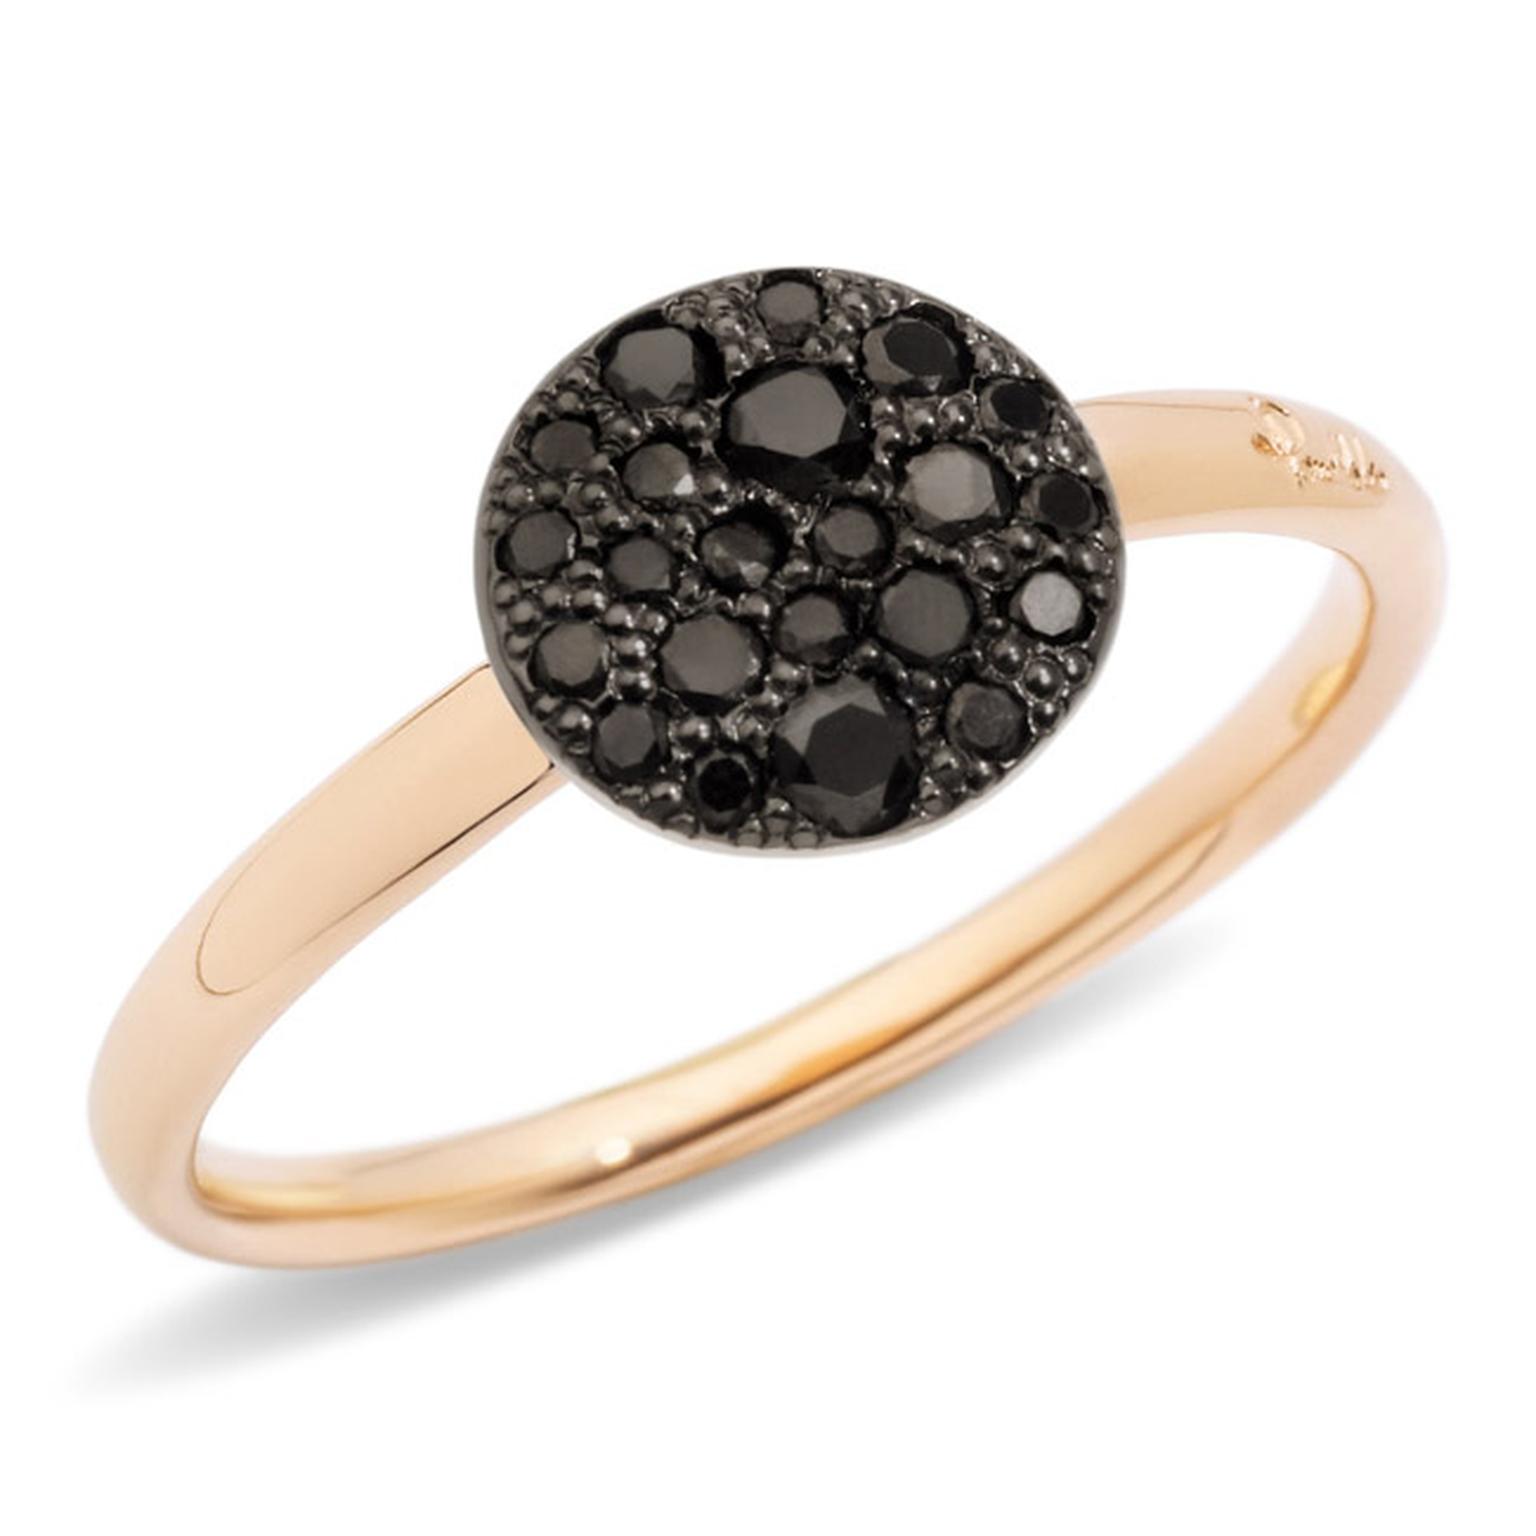 Pomellato Sabbia snow-set black diamond and rose gold ring (£1,000).